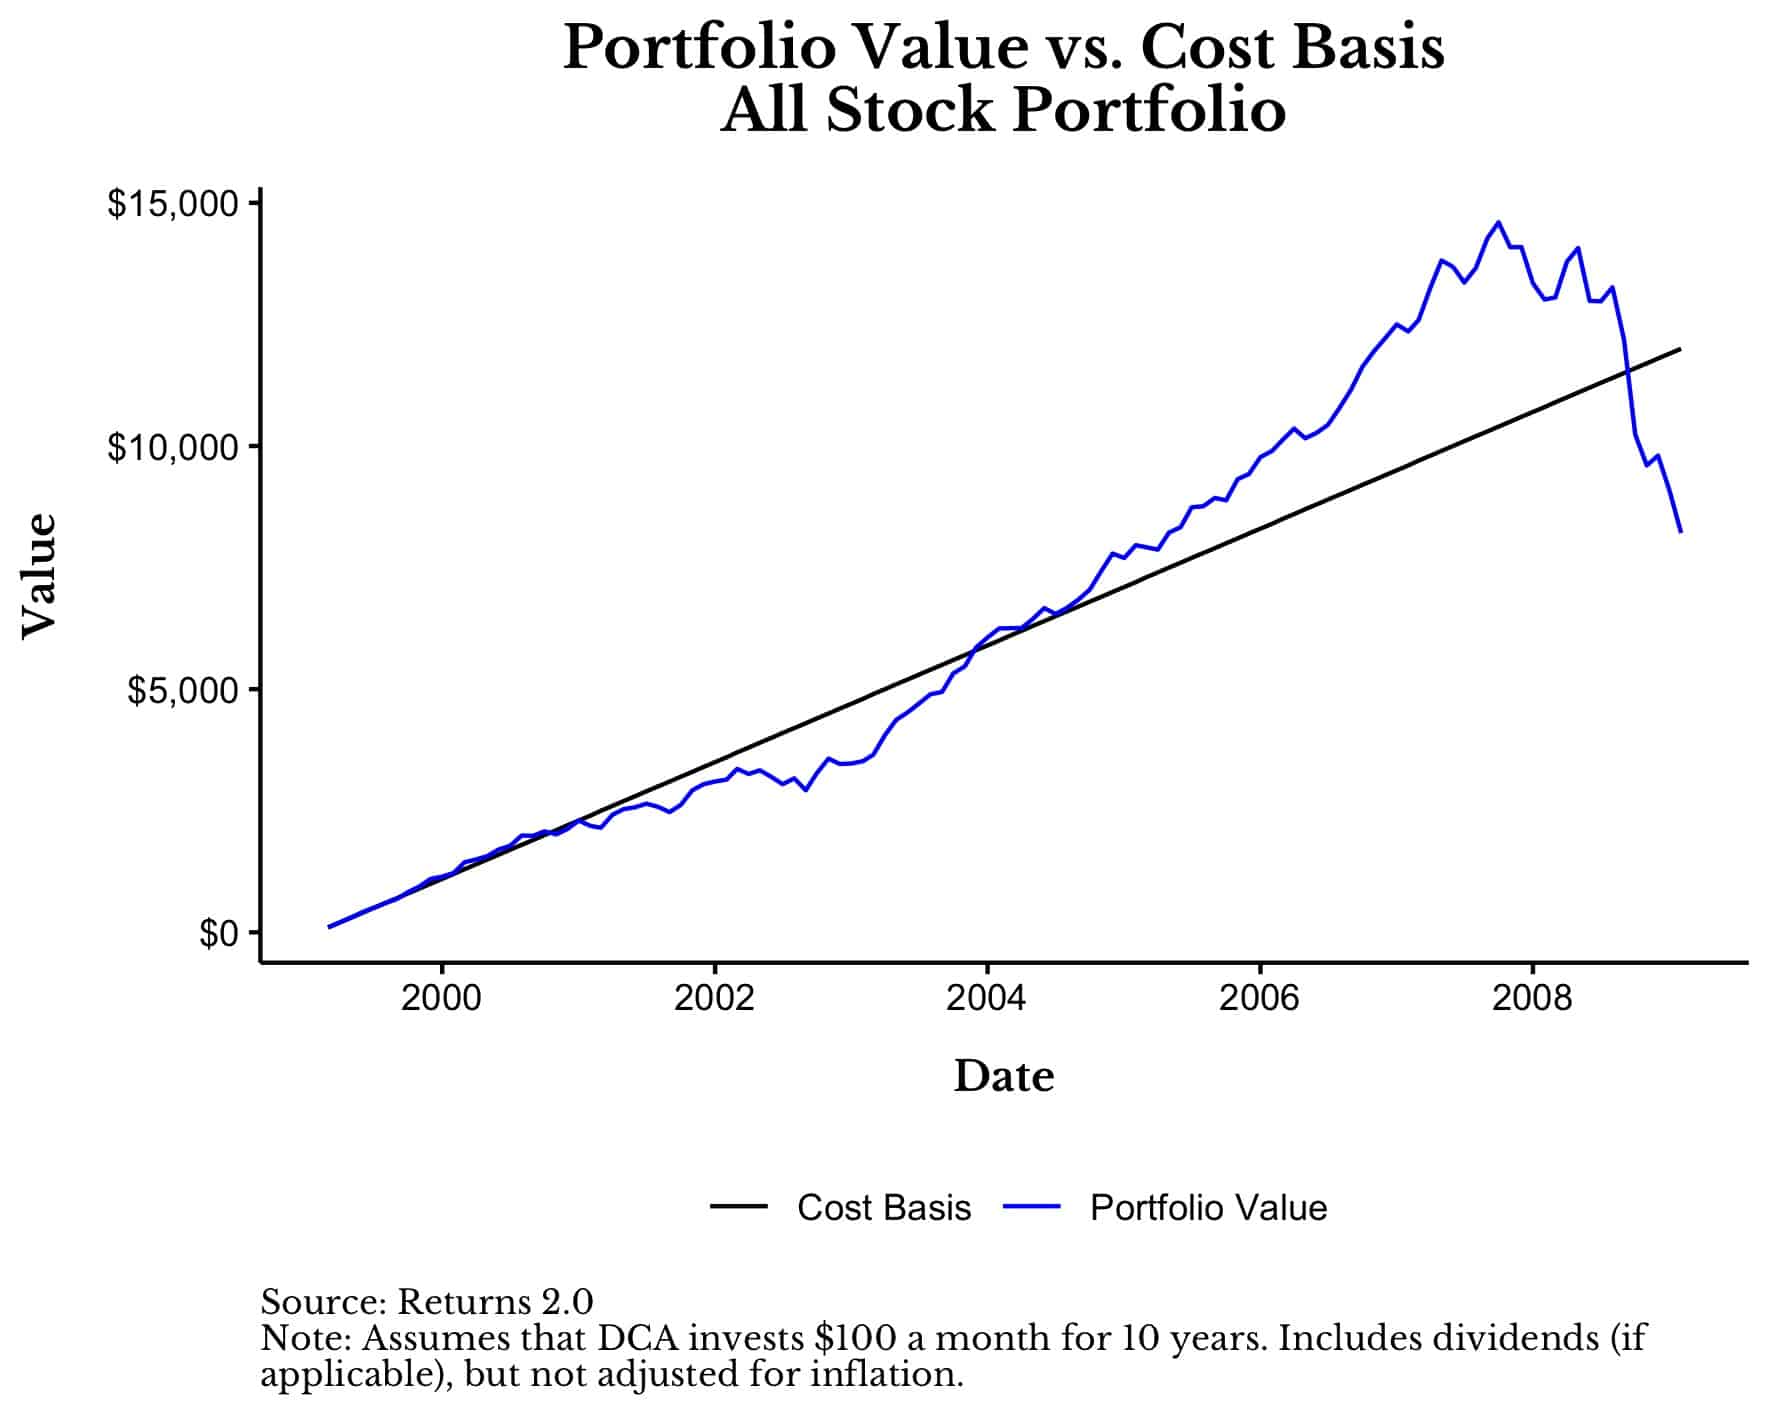 Portfolio value vs cost basis of all stock portfolio, 1999-2009